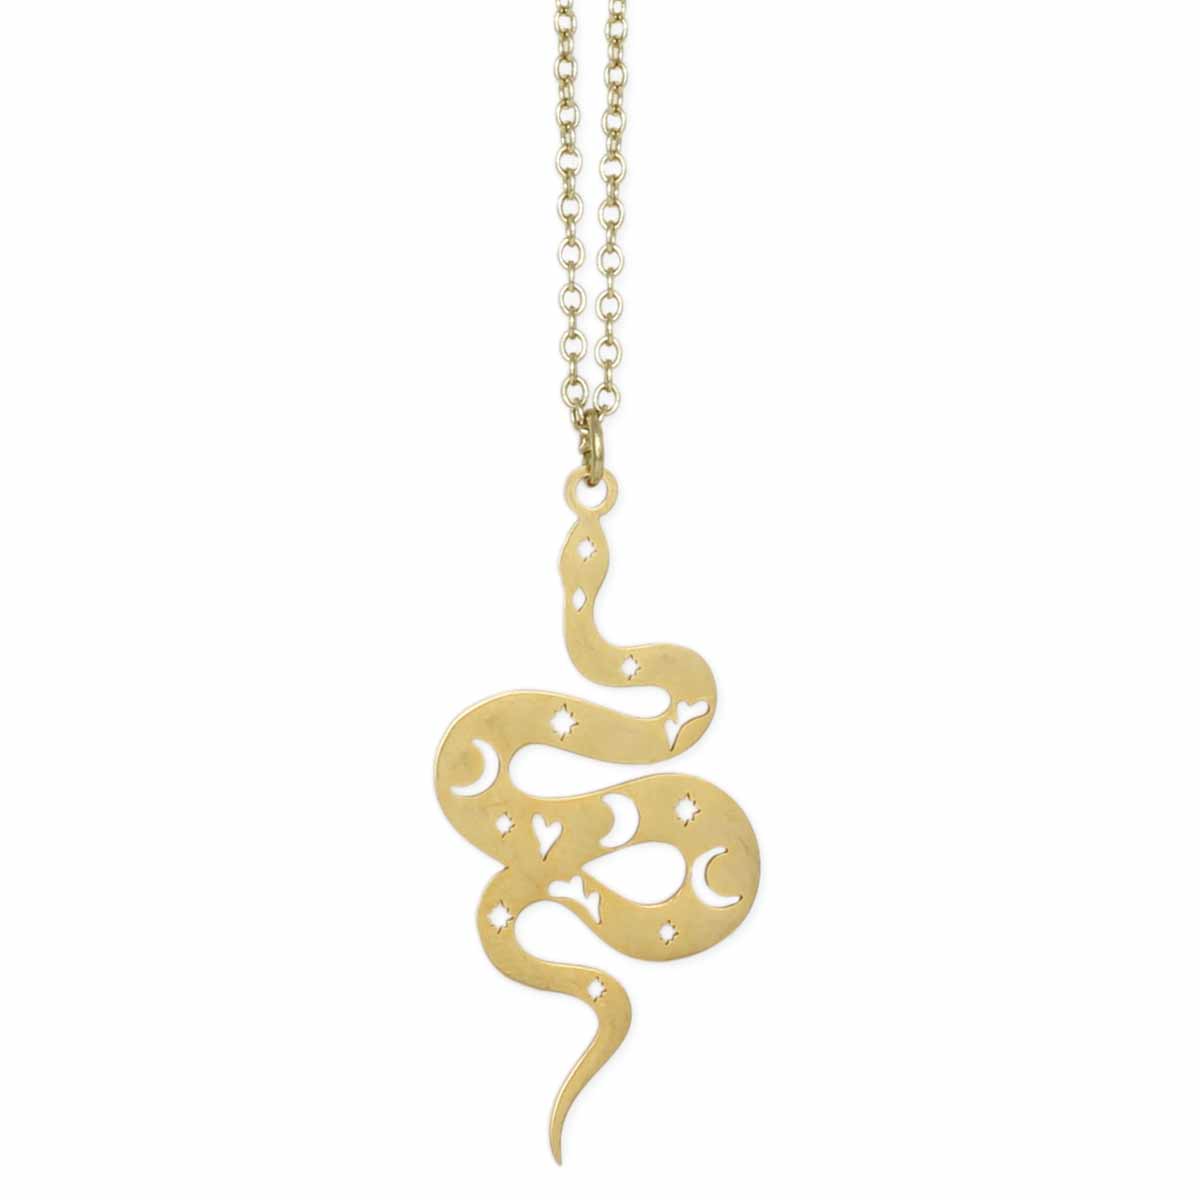 Celestial Serpent Gold Necklace - Spiral Circle